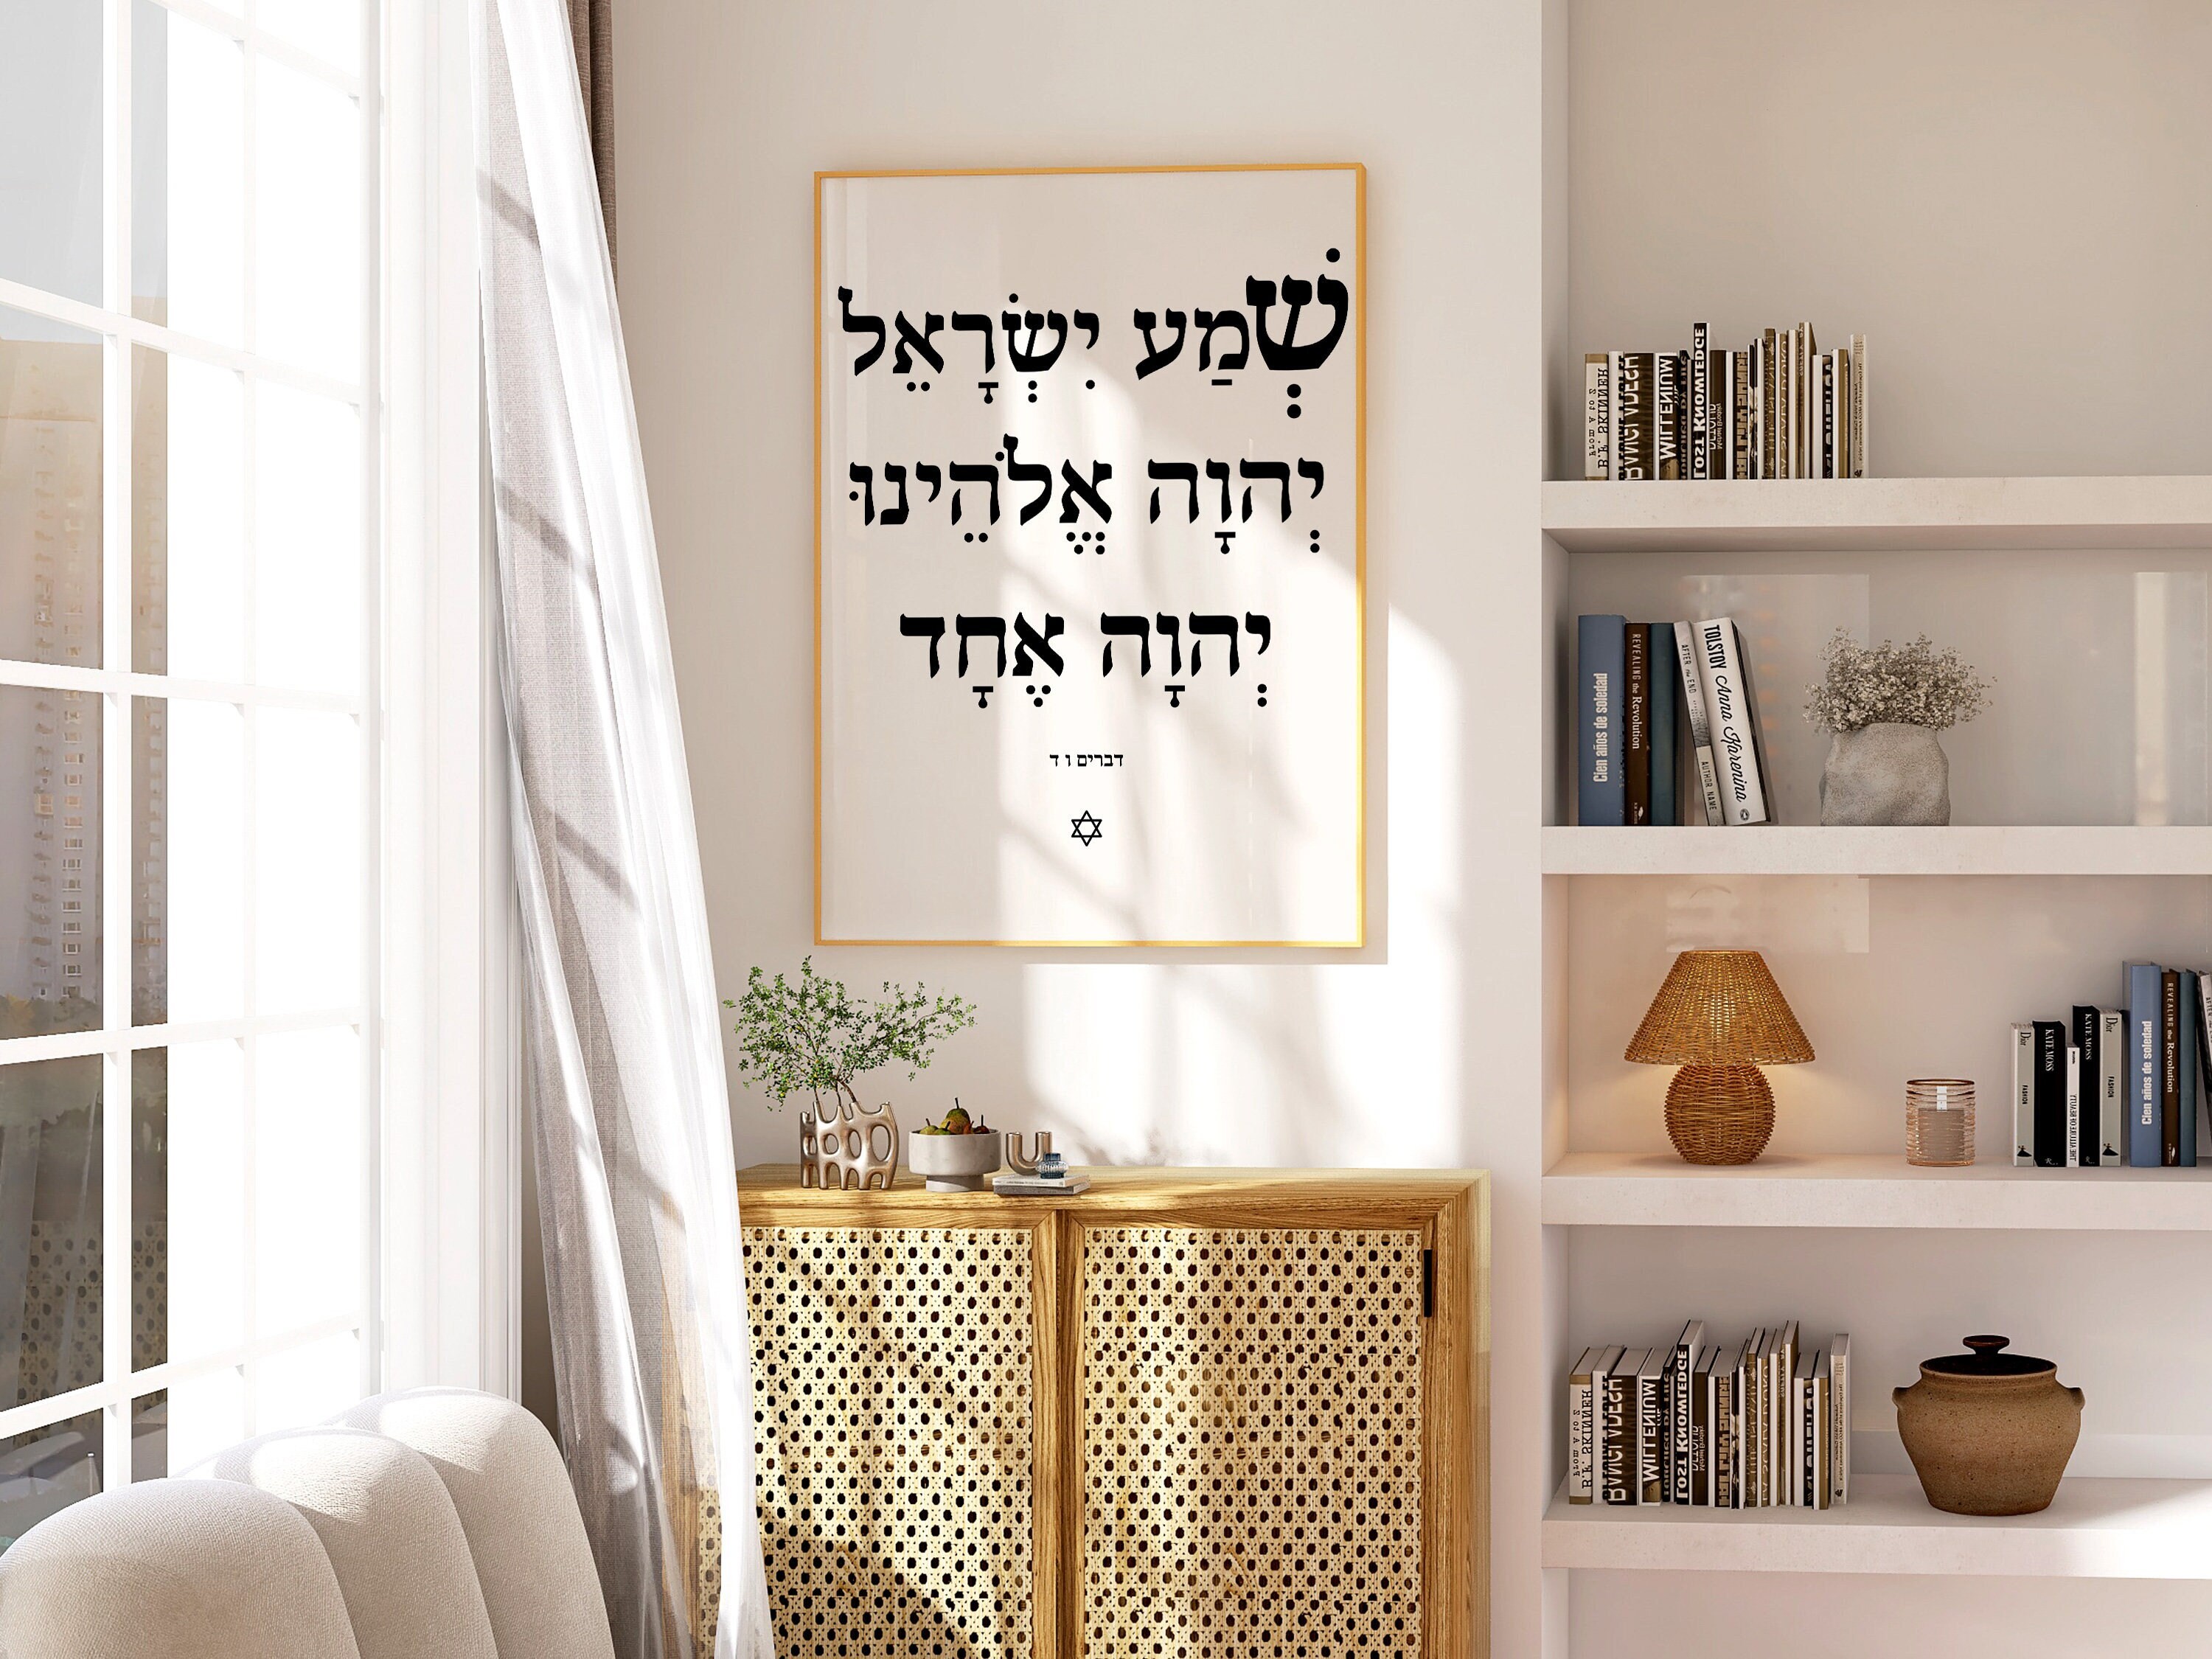 Shema Israel Jewish Prayer Hebrew Wall Sticker Living Room Bedroom Holiday  Decoration Outdoor & Indoor Sign Wall Decal - AliExpress